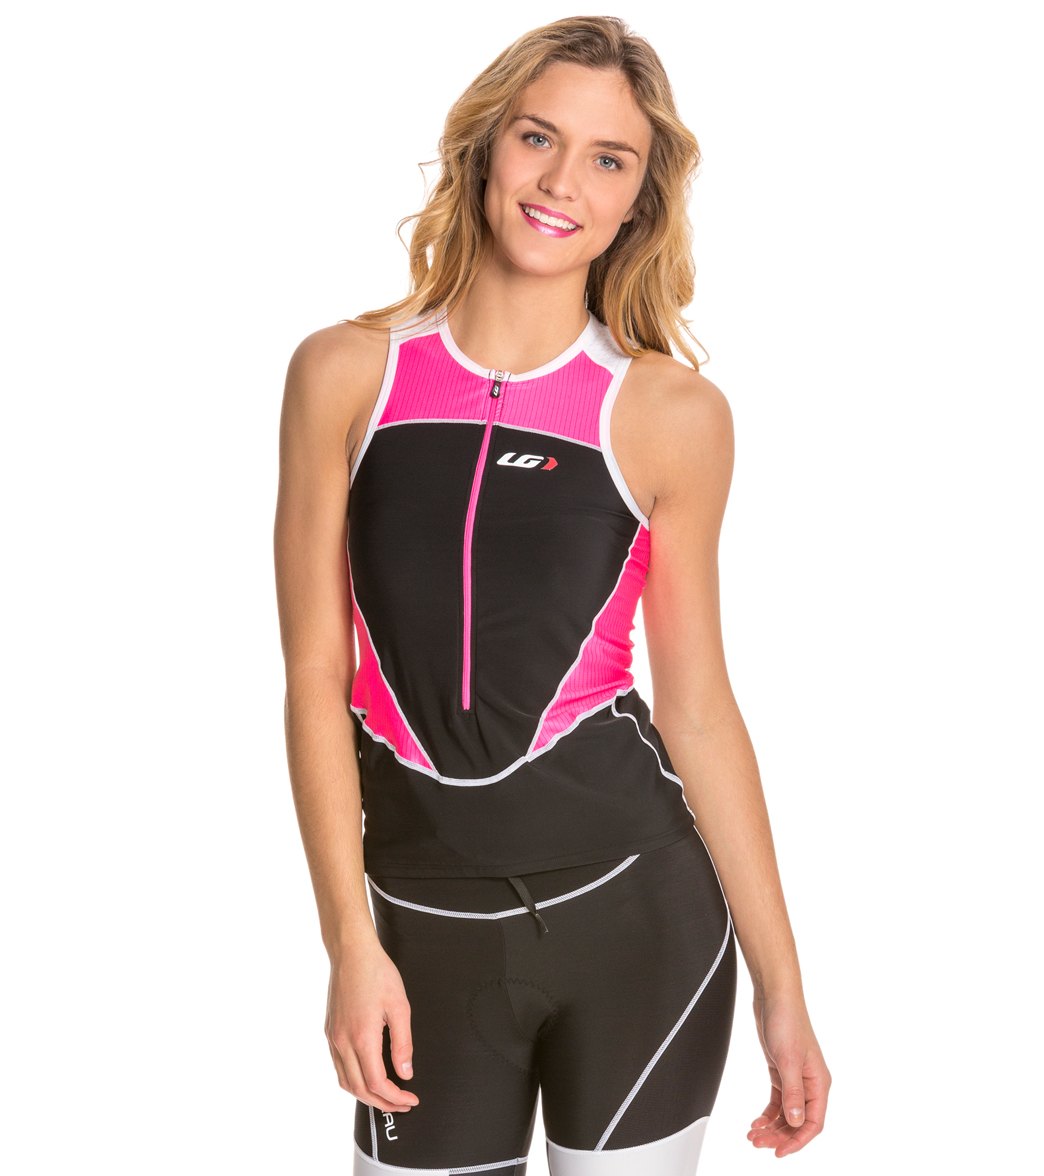 Louis Garneau Women's Pro 2 Sleeveless Triathlon Top - Black/Flash Pink X-Small - Swimoutlet.com